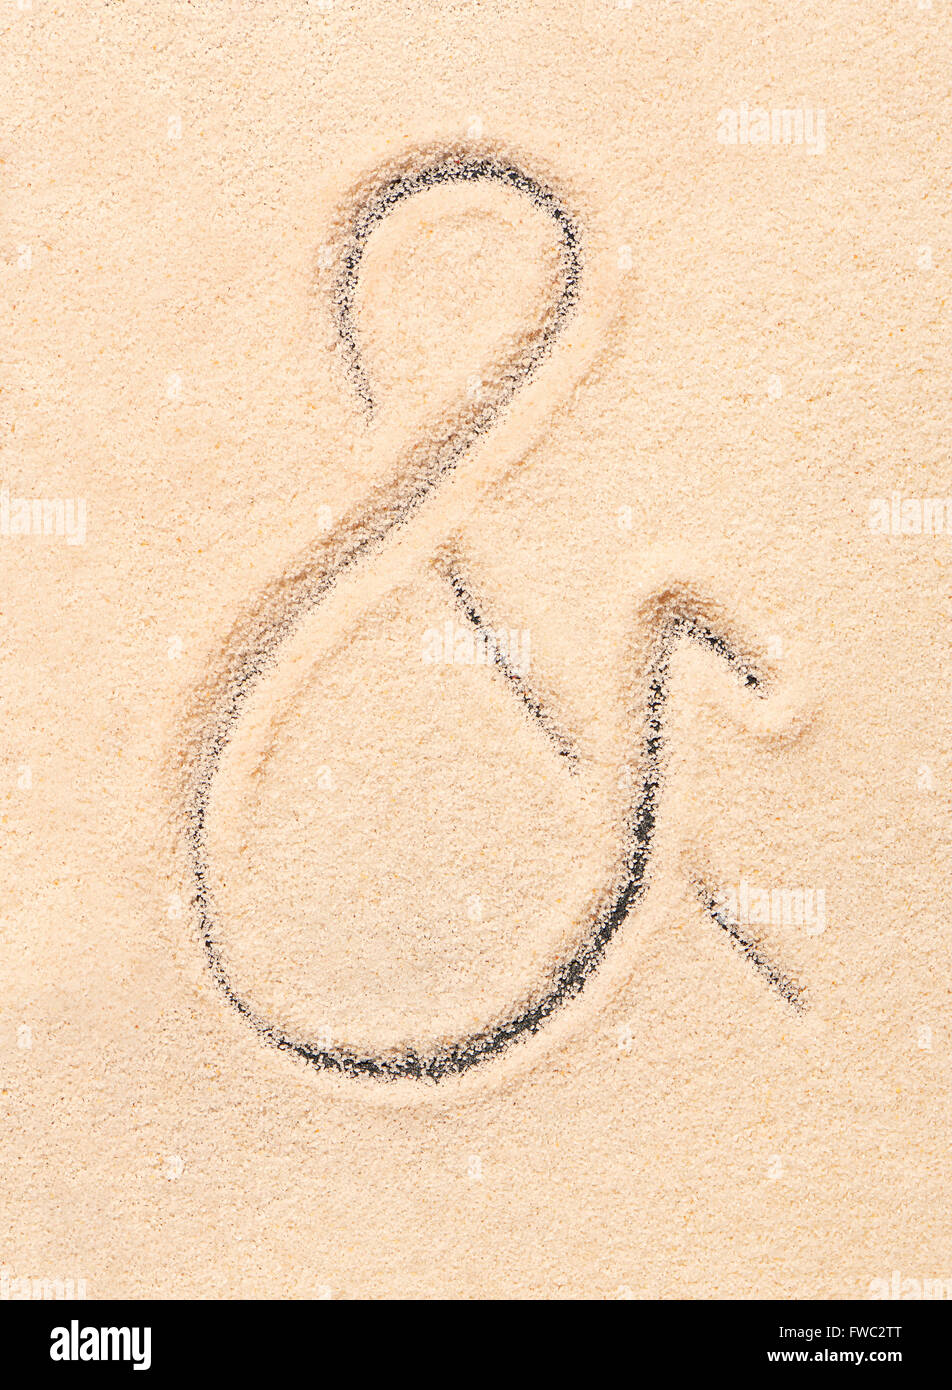 Ampersand symbol drawn on sand. Summer beach background Stock Photo